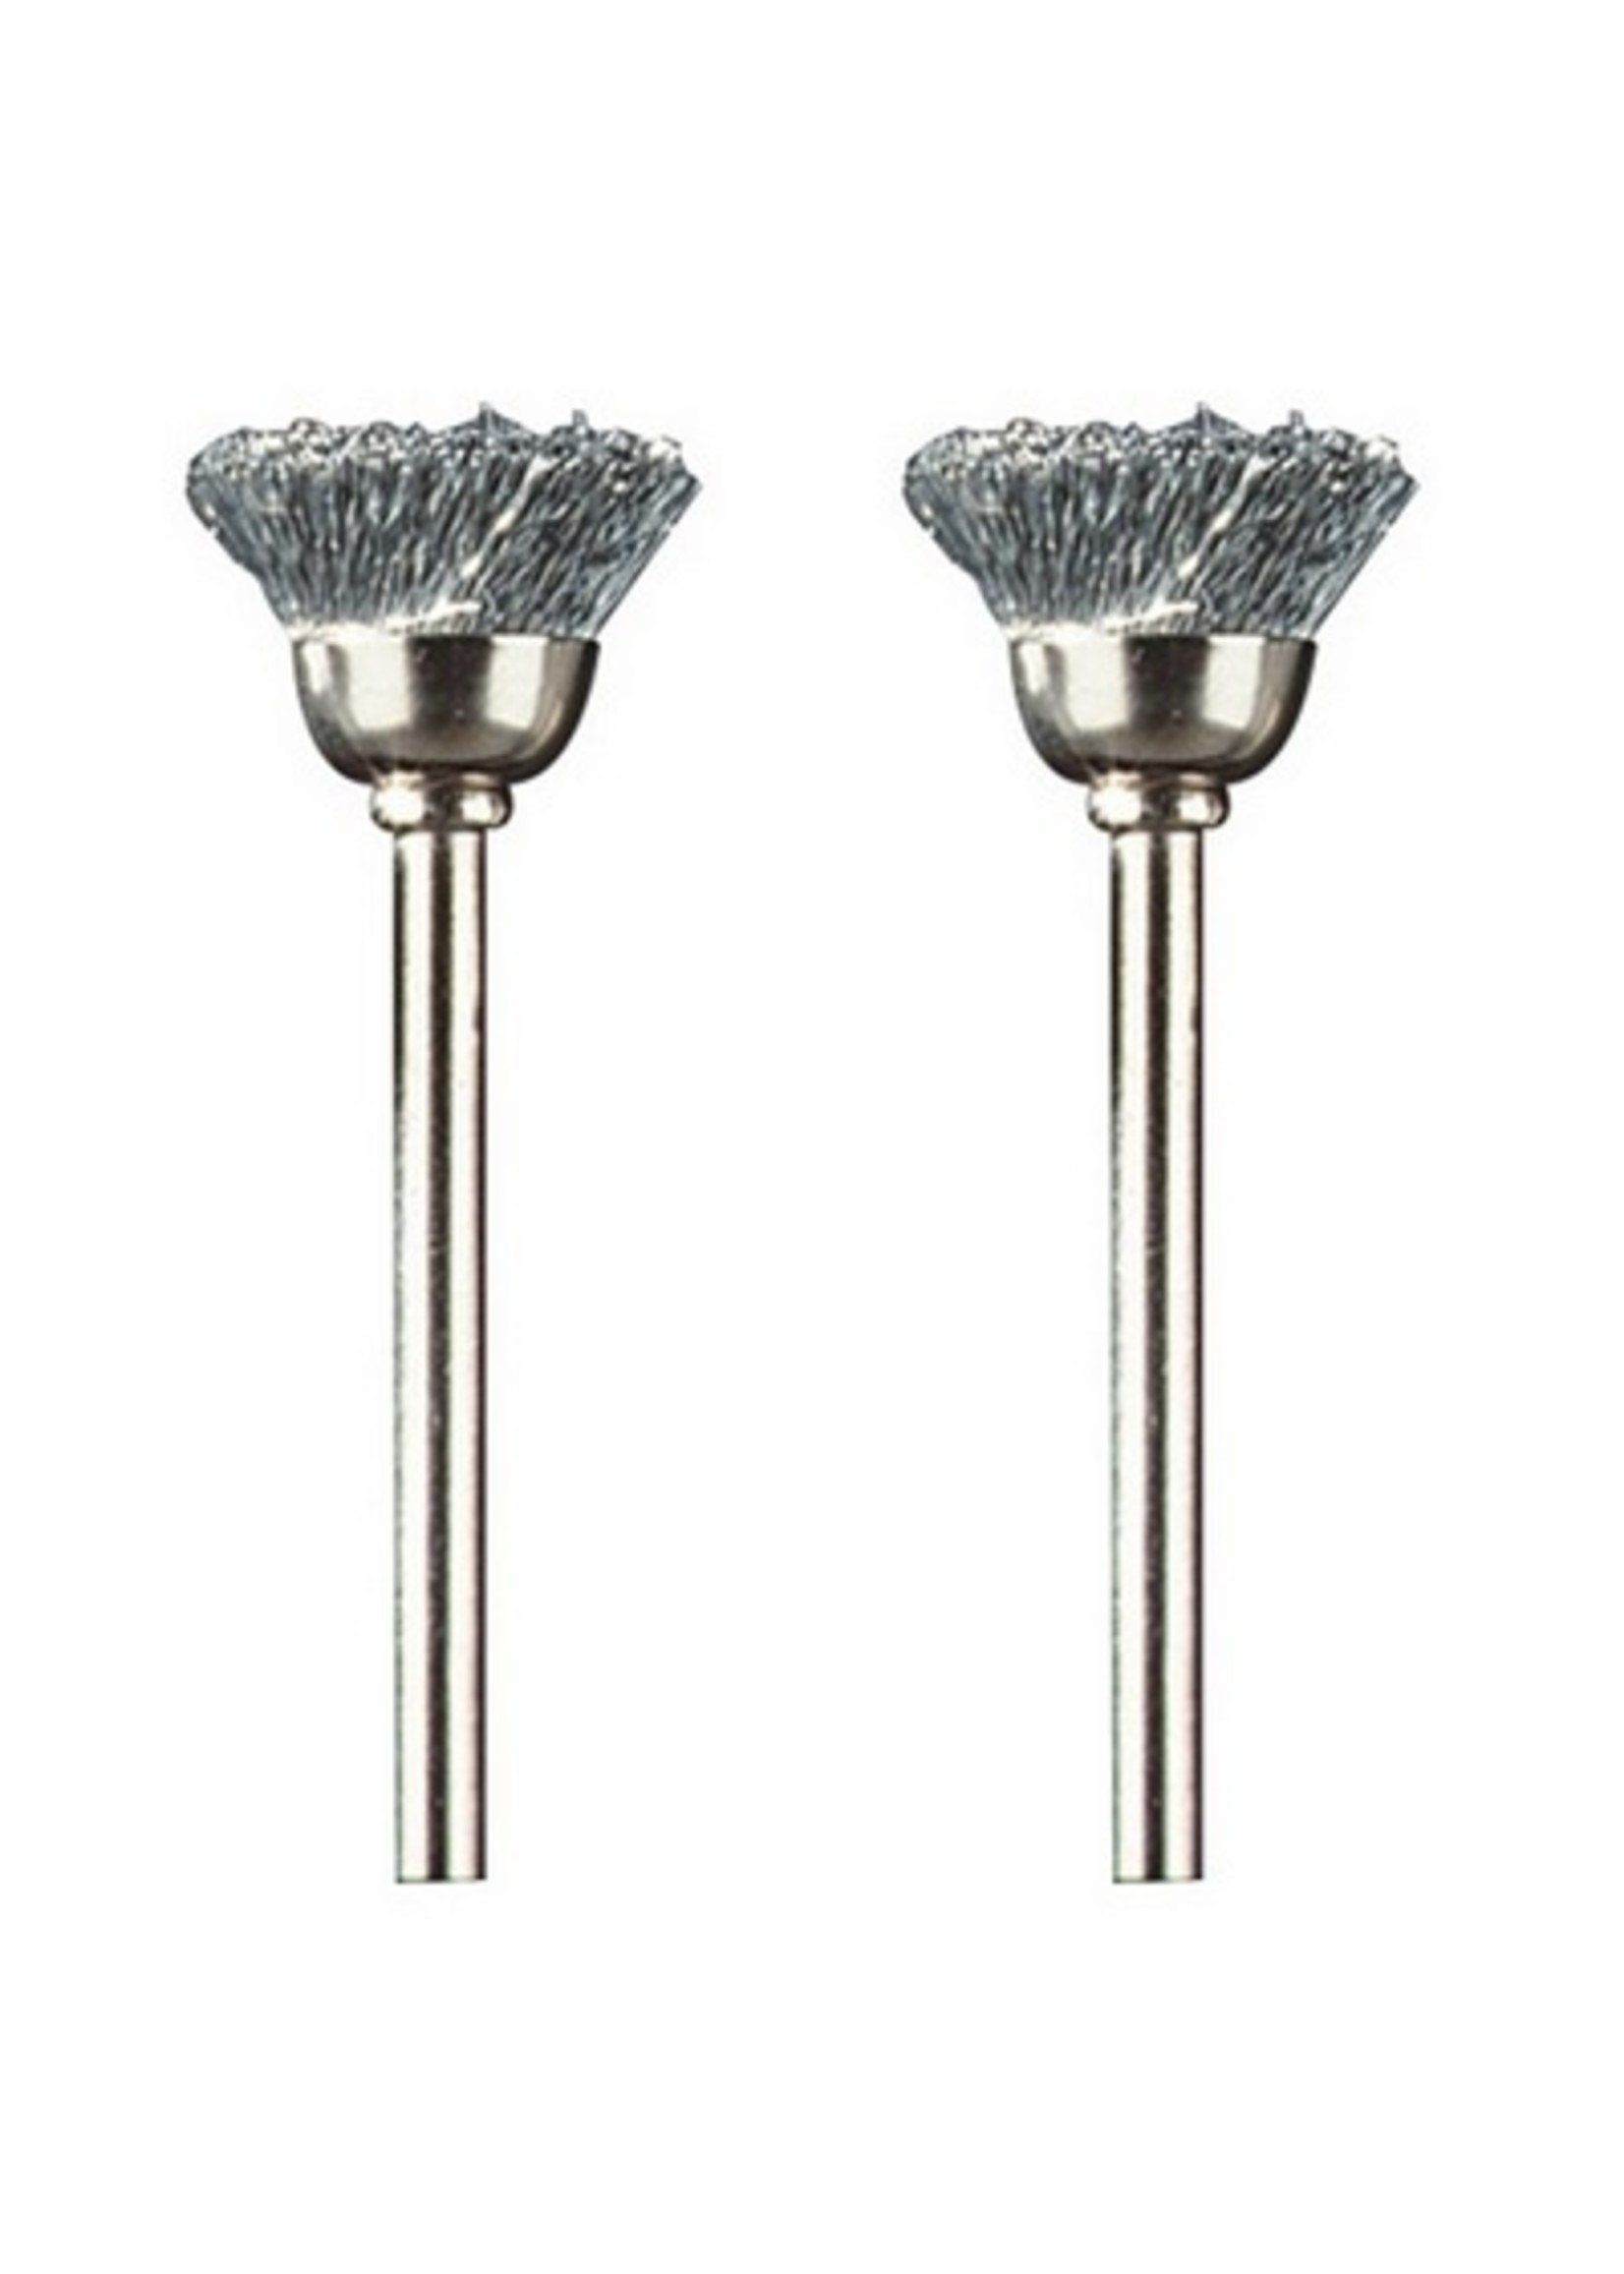 Dremel 442-02 - 1/2" Carbon Steel Brushes